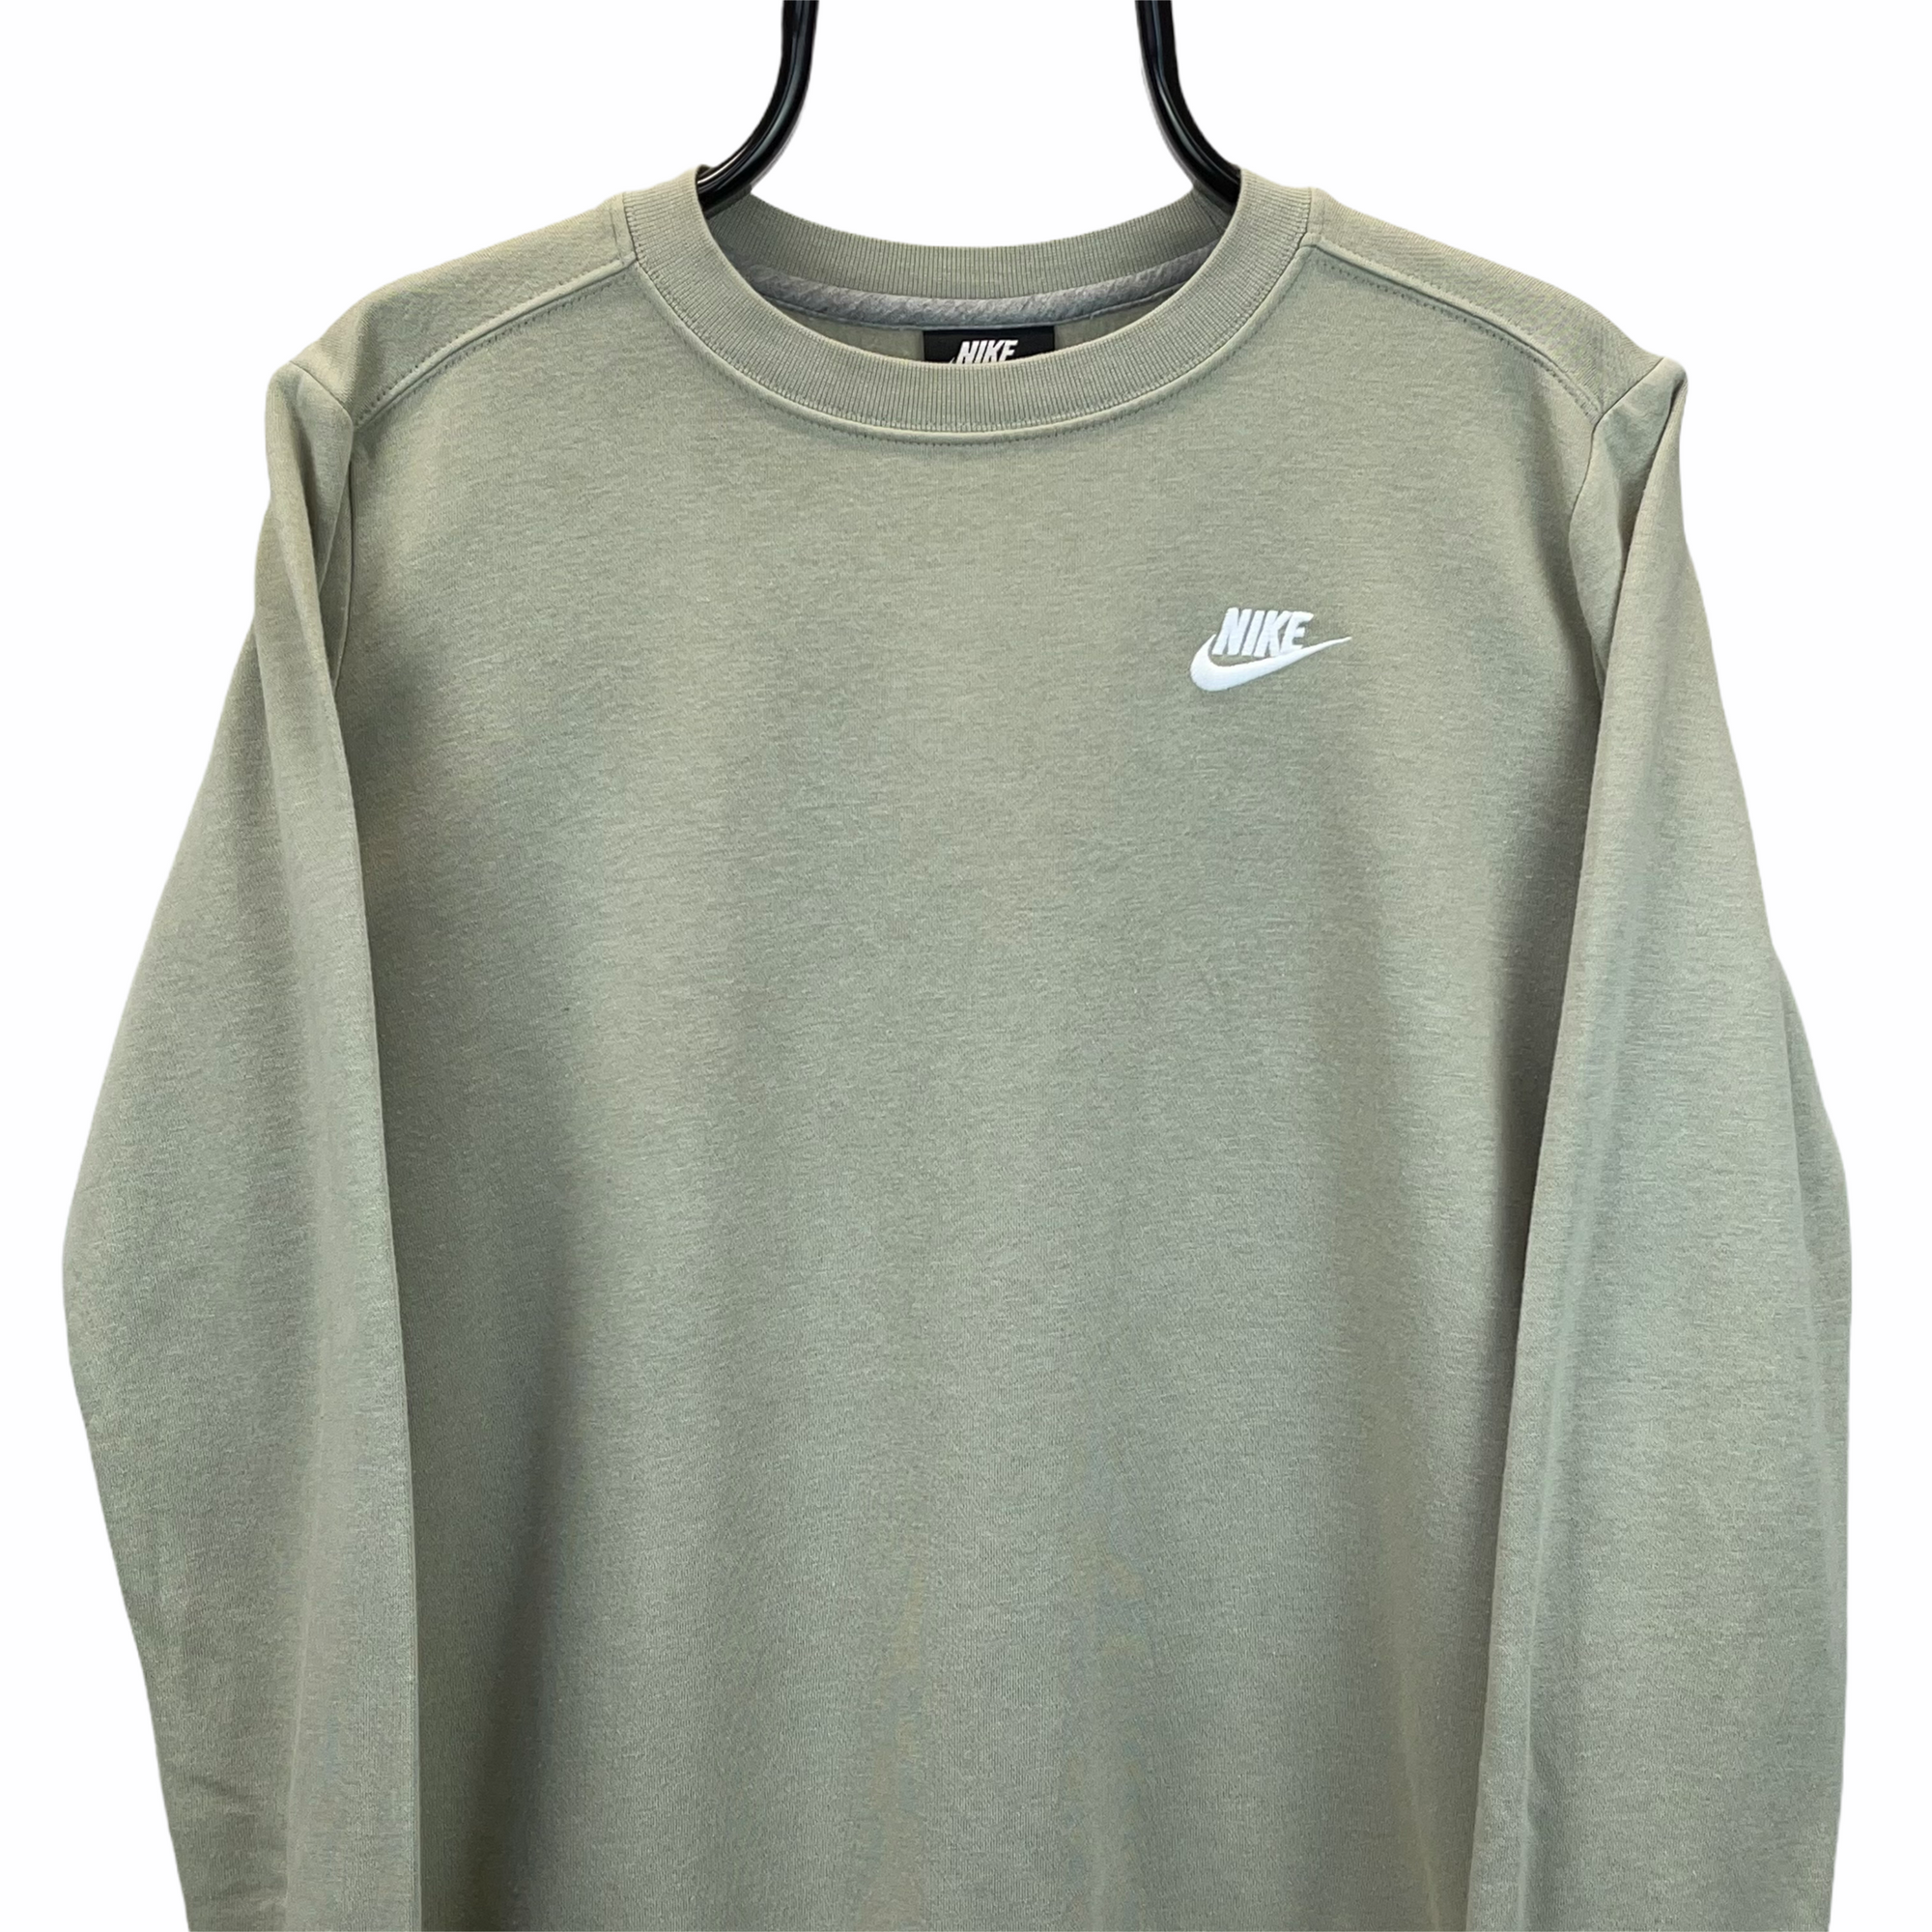 Nike Embroidered Small Logo Sweatshirt in Beige - Men's Small/Women's Medium